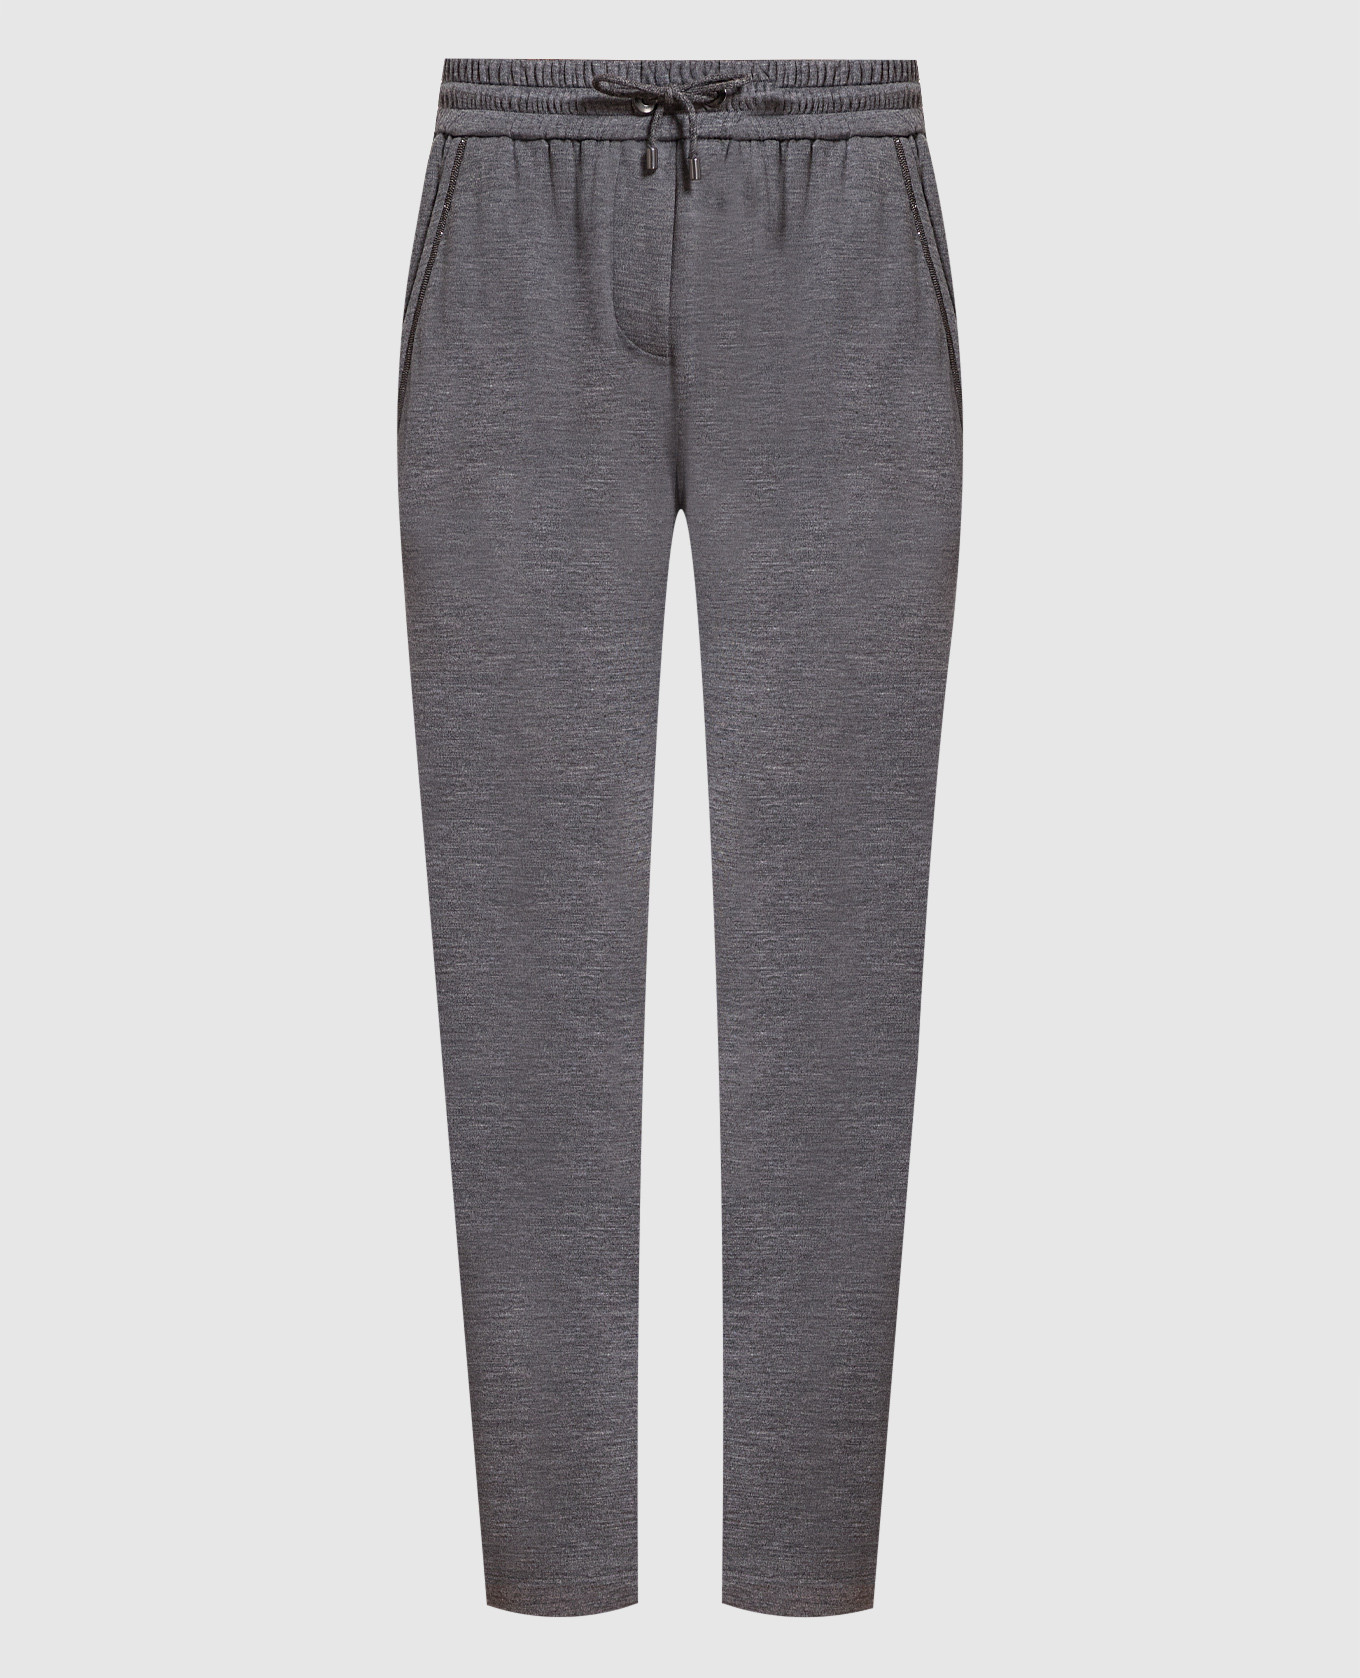 Gray sweatpants with monil chain